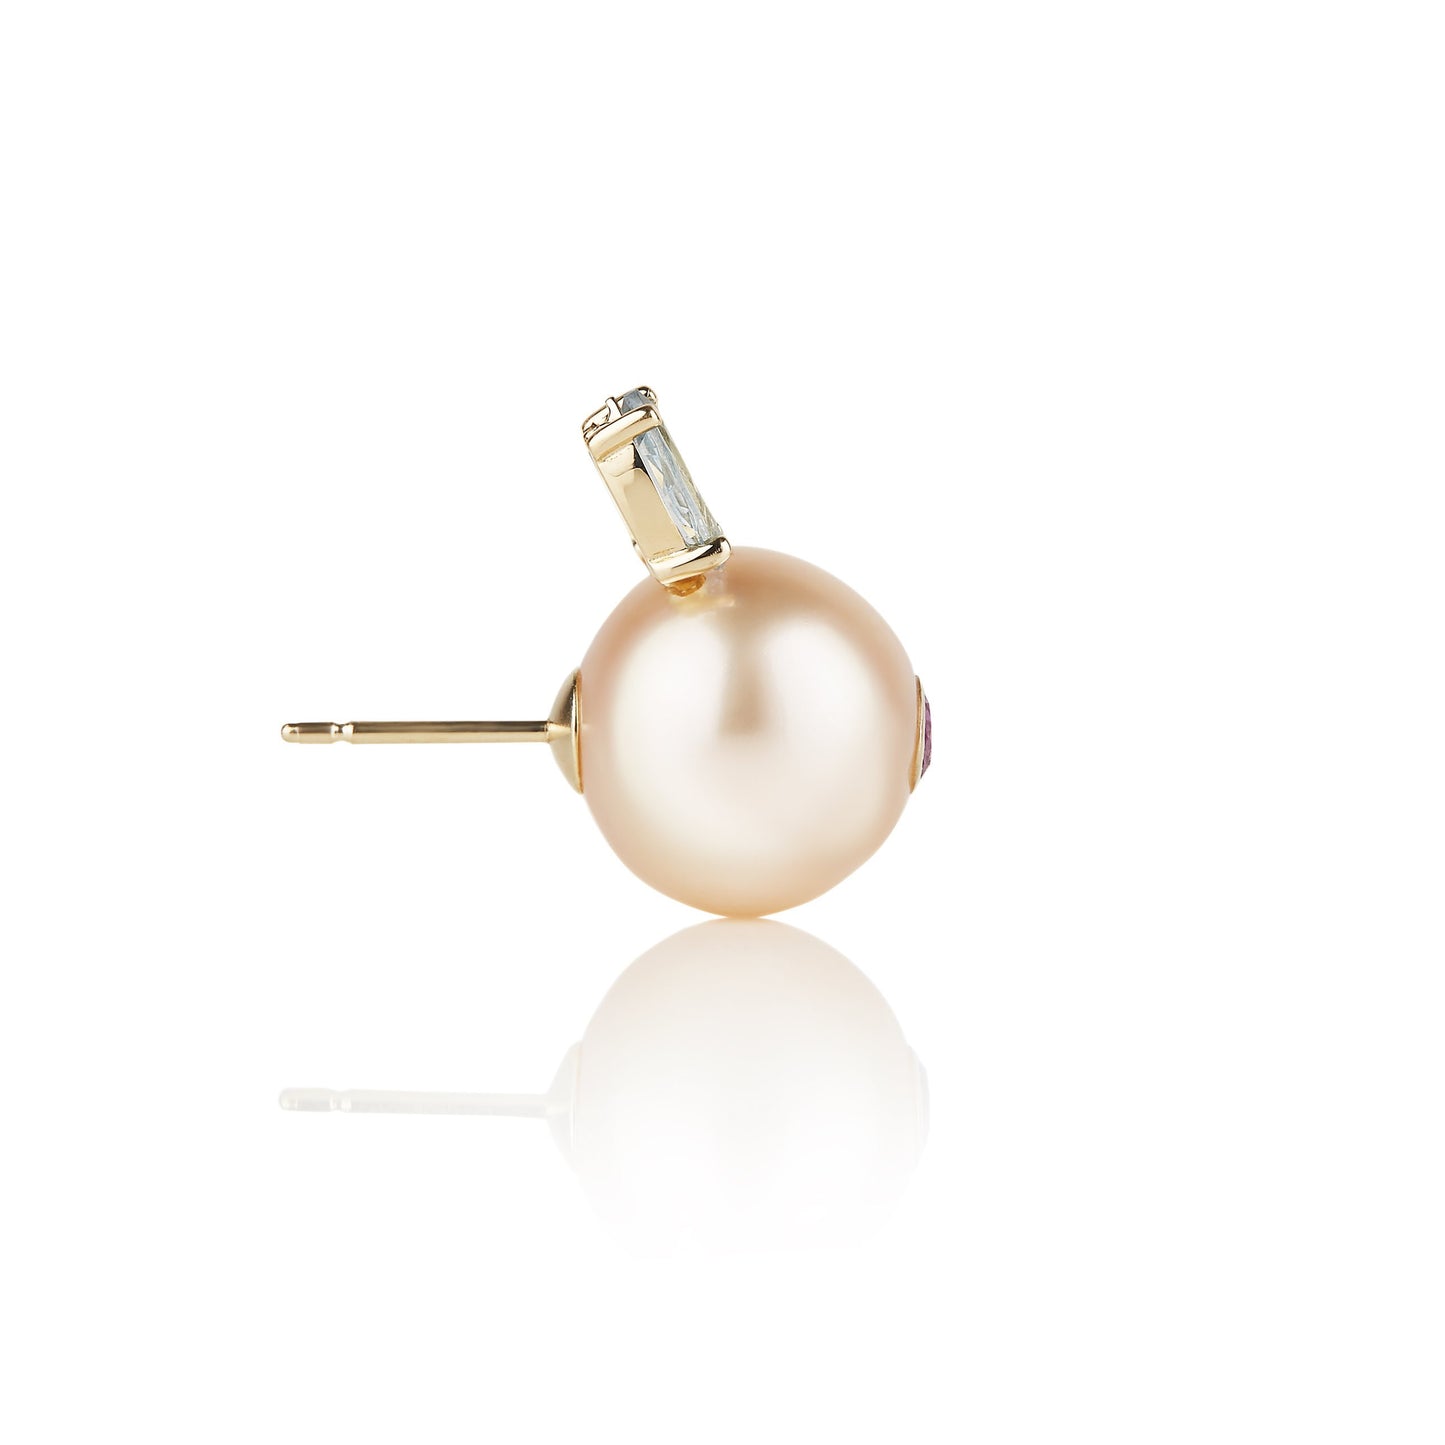 Pink pearl, rabbit earrings, 14k yellow gold, ruby, aqua